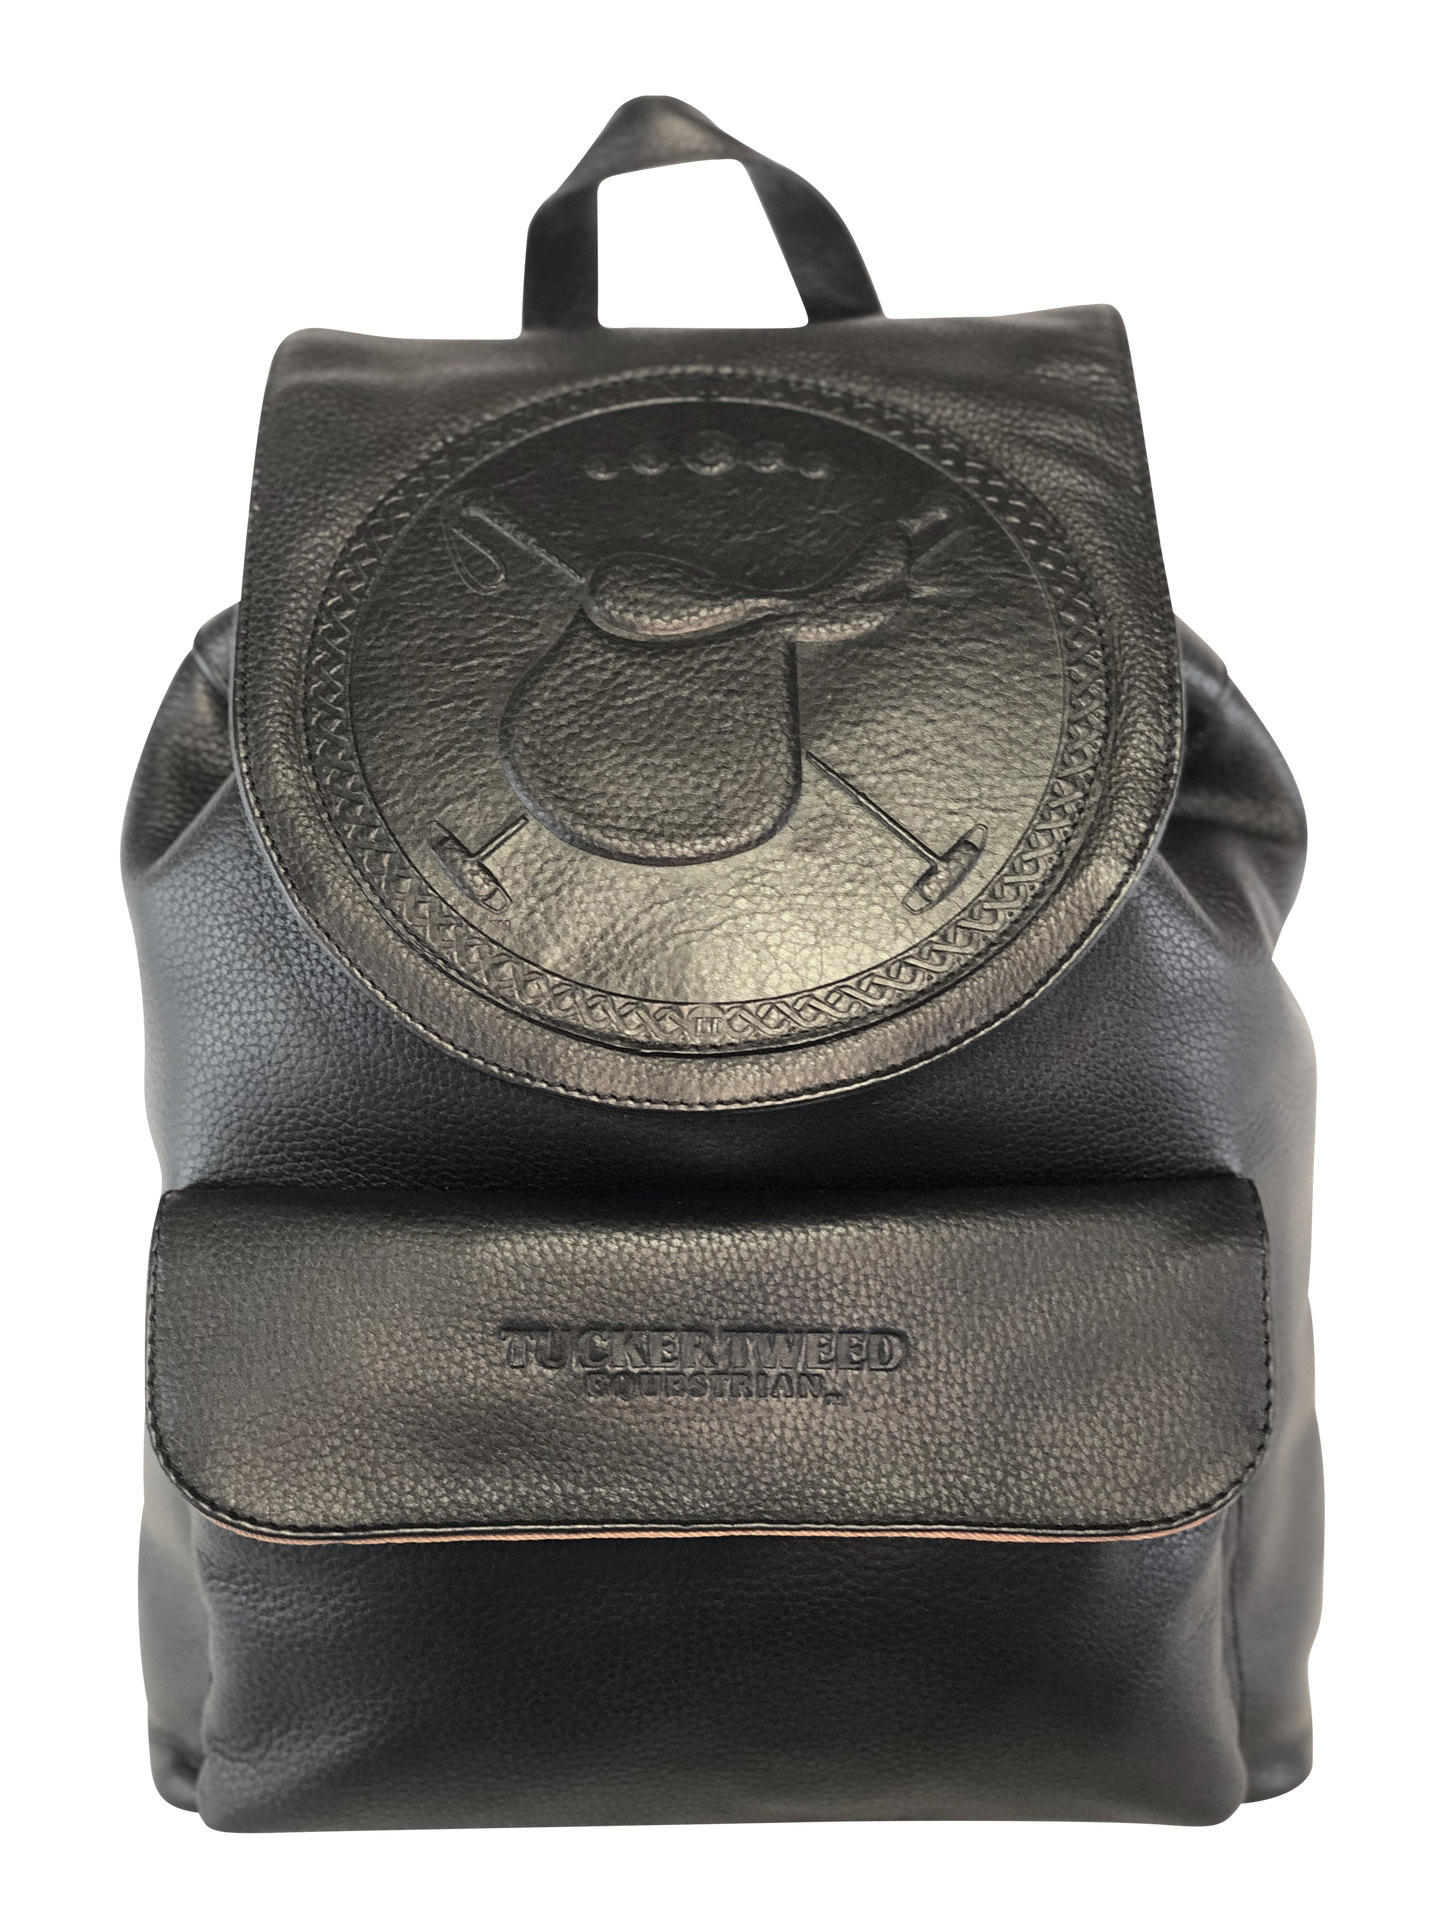 Tucker Tweed Equestrian Leather Handbags Polo Black Brandywine Backpack: Polo